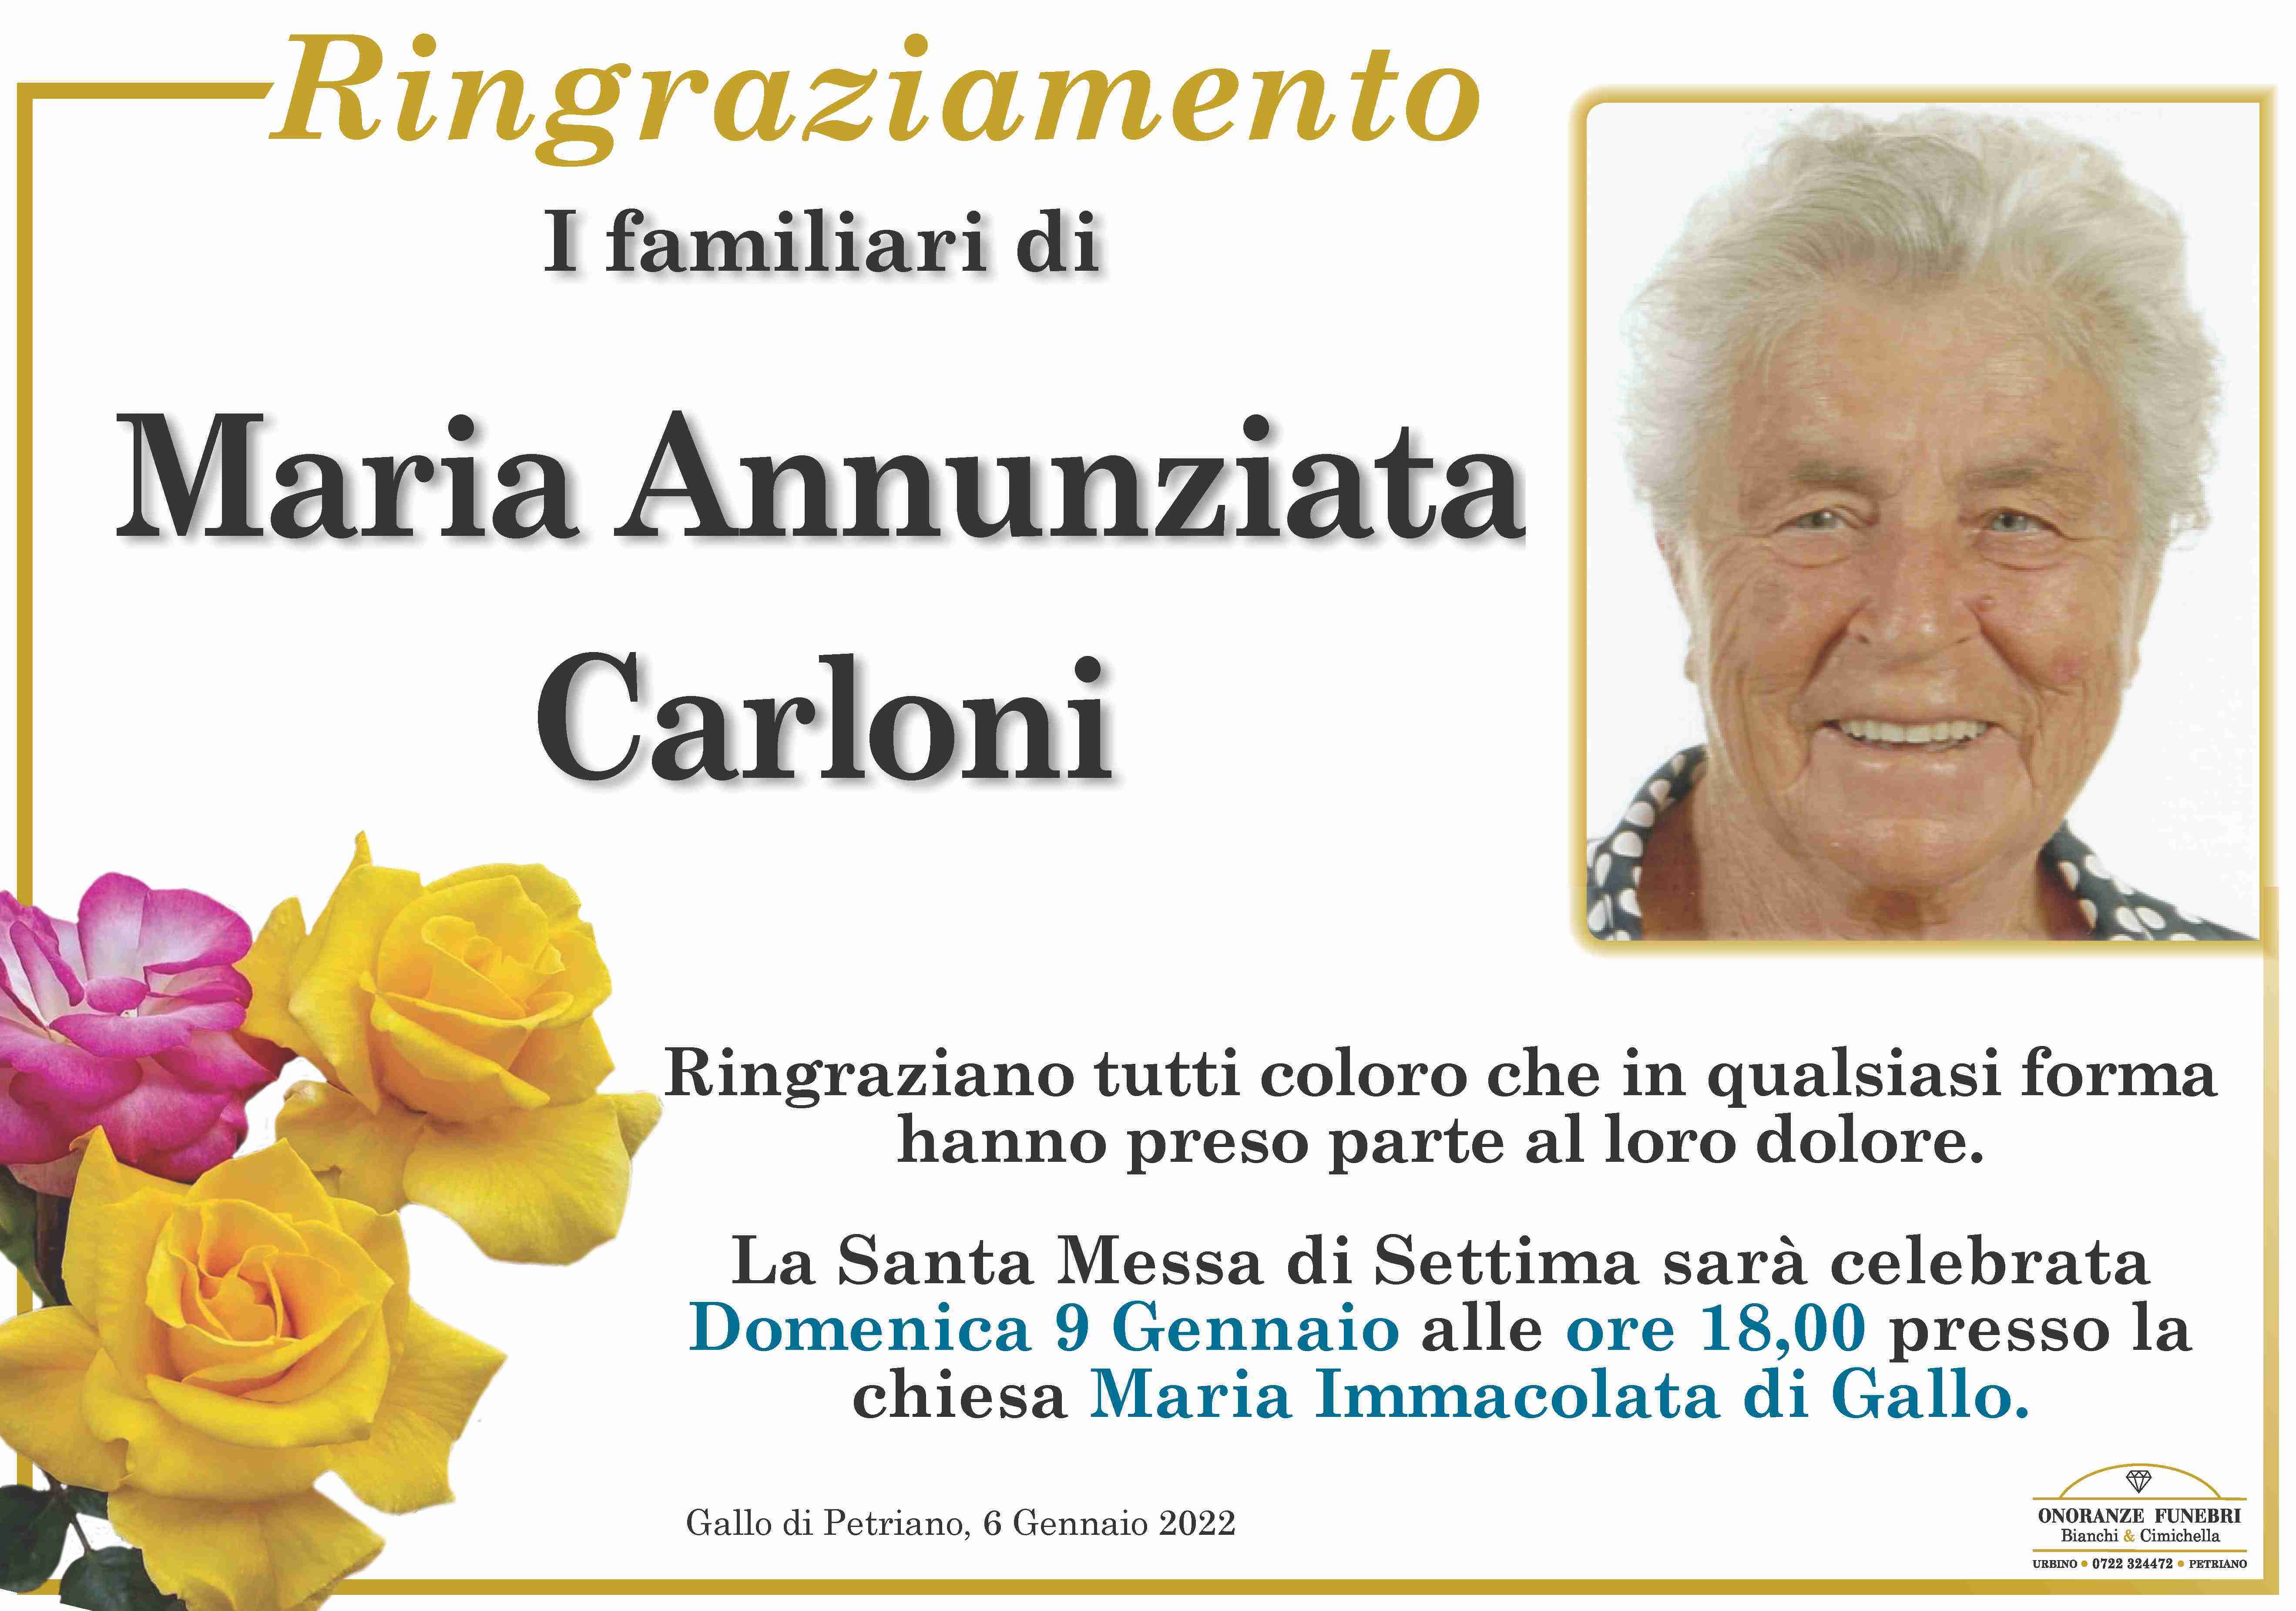 Maria Annunziata Carloni